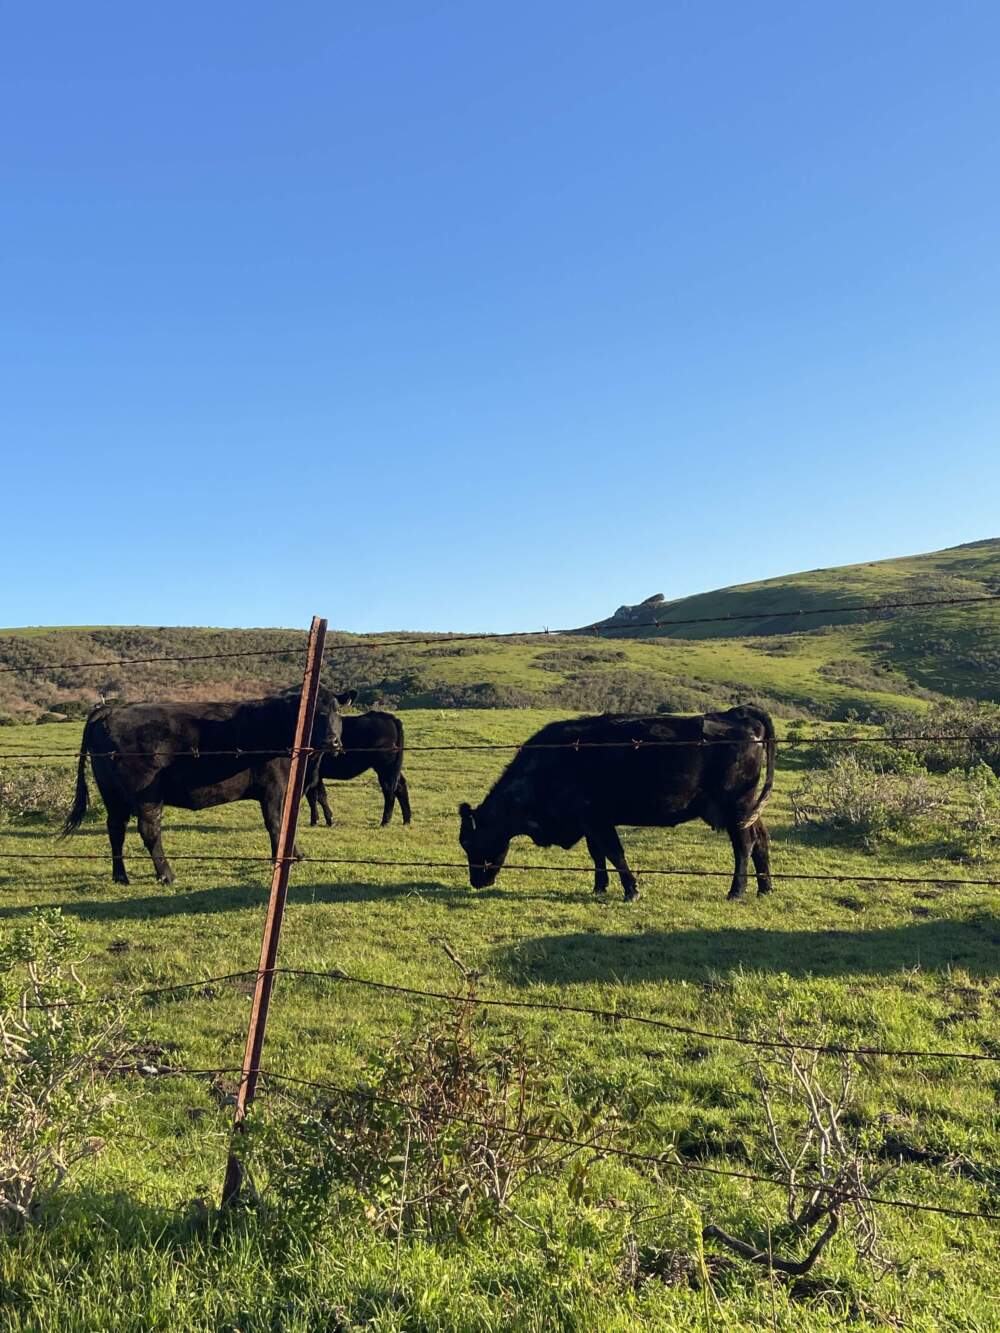 Cows graze near Tomales Bay. (Kathy Gunst/Here & Now)